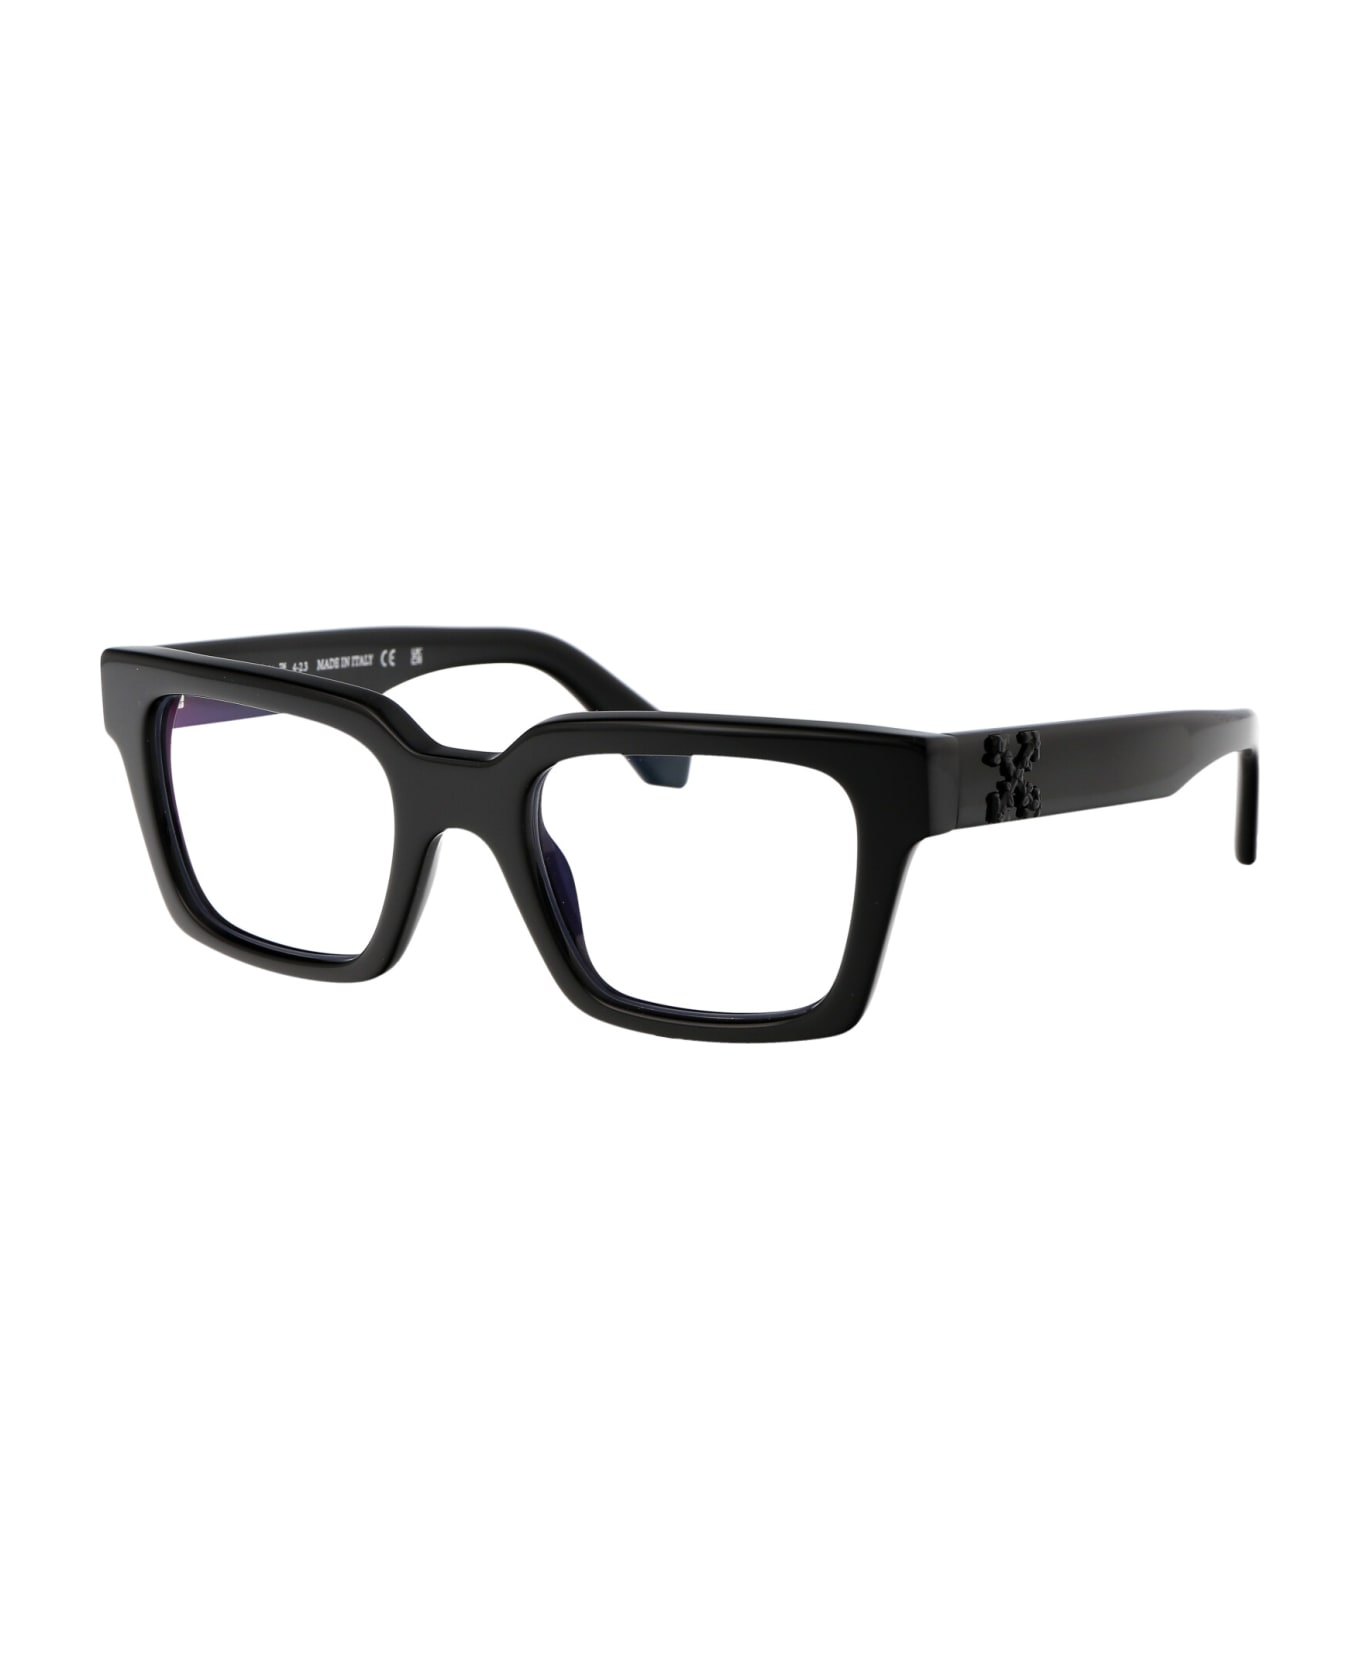 Off-White Clip On Sunglasses - 1025 BLACK RED サングラス